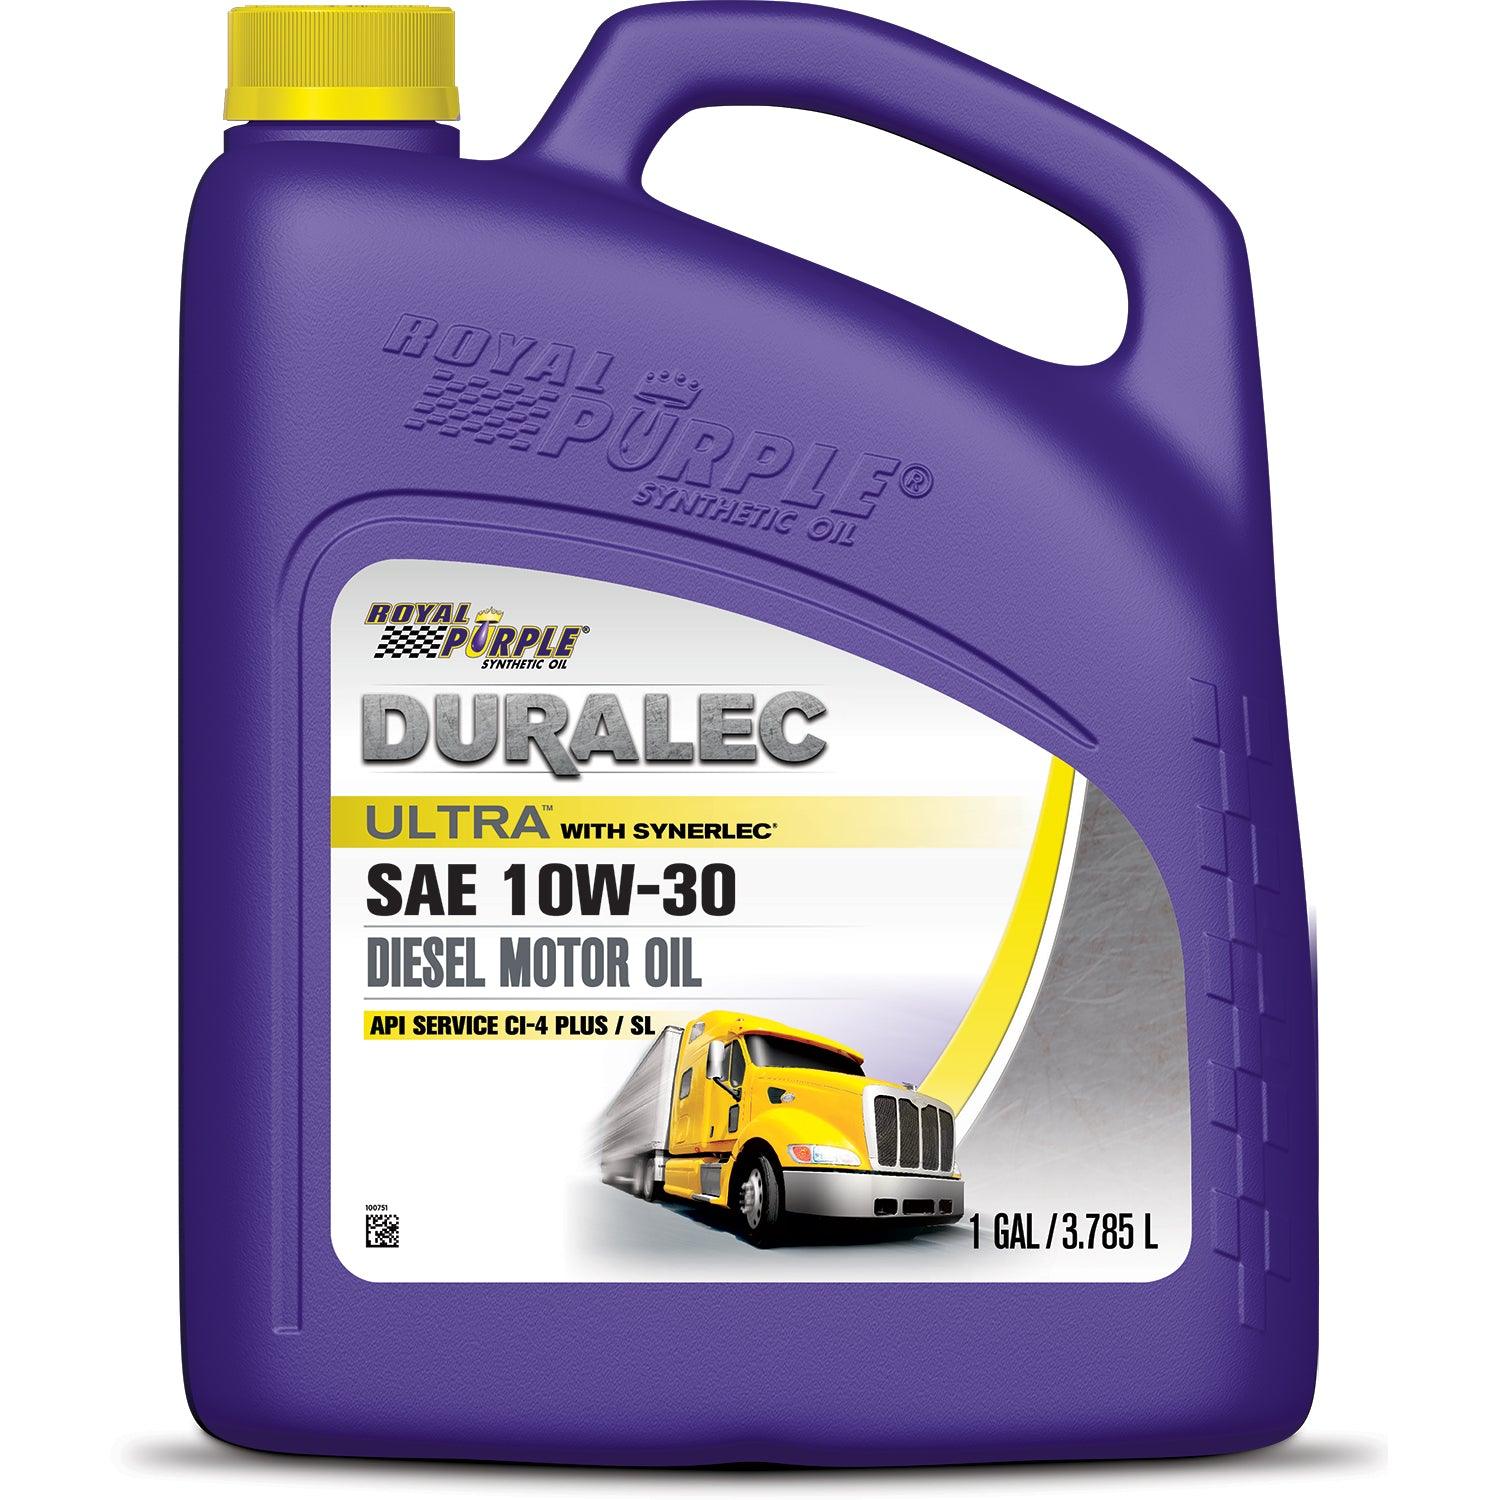 Duralec Ultra 10w30 Oil 1 Gallon - Burlile Performance Products